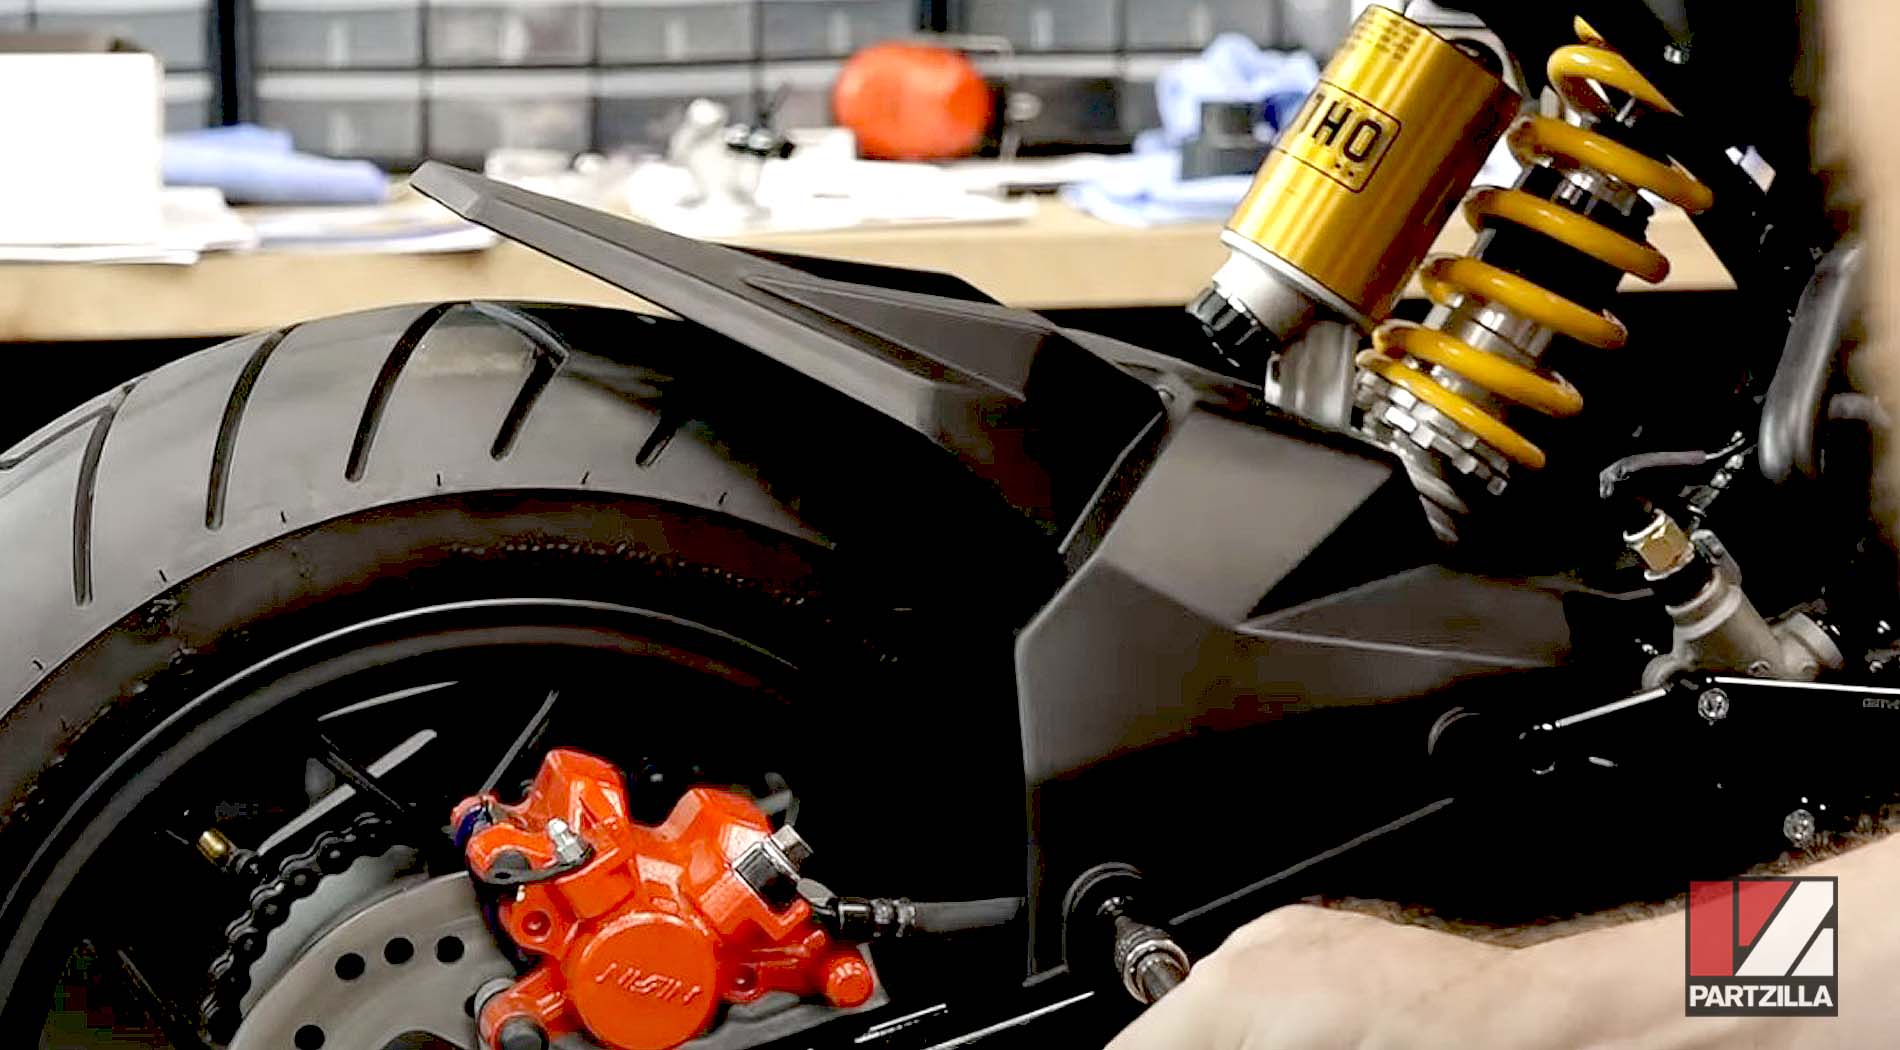 Honda Grom aftermarket suspension upgrades shock absorber installation